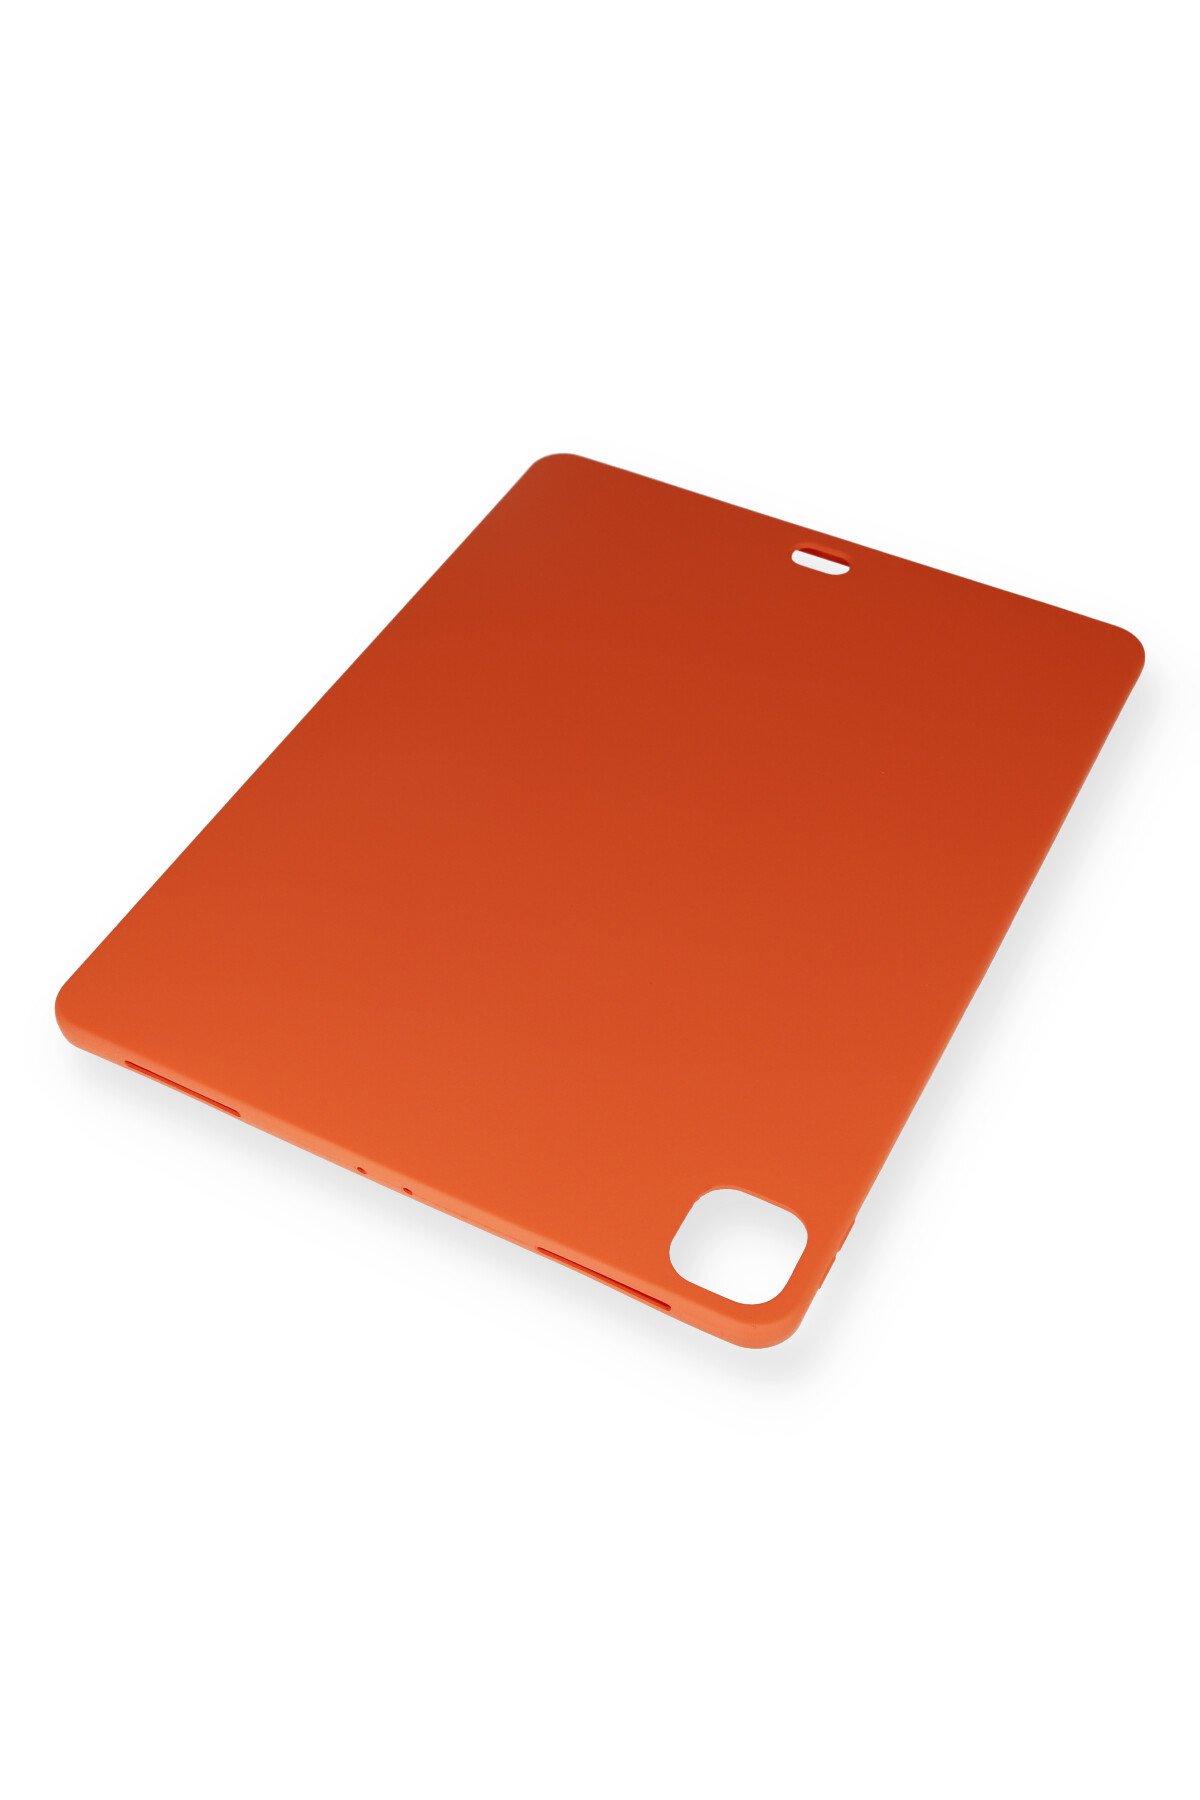 Newface iPad Pro 12.9 (2020) Kılıf Kalemlikli Mars Tablet Kılıfı - Lacivert